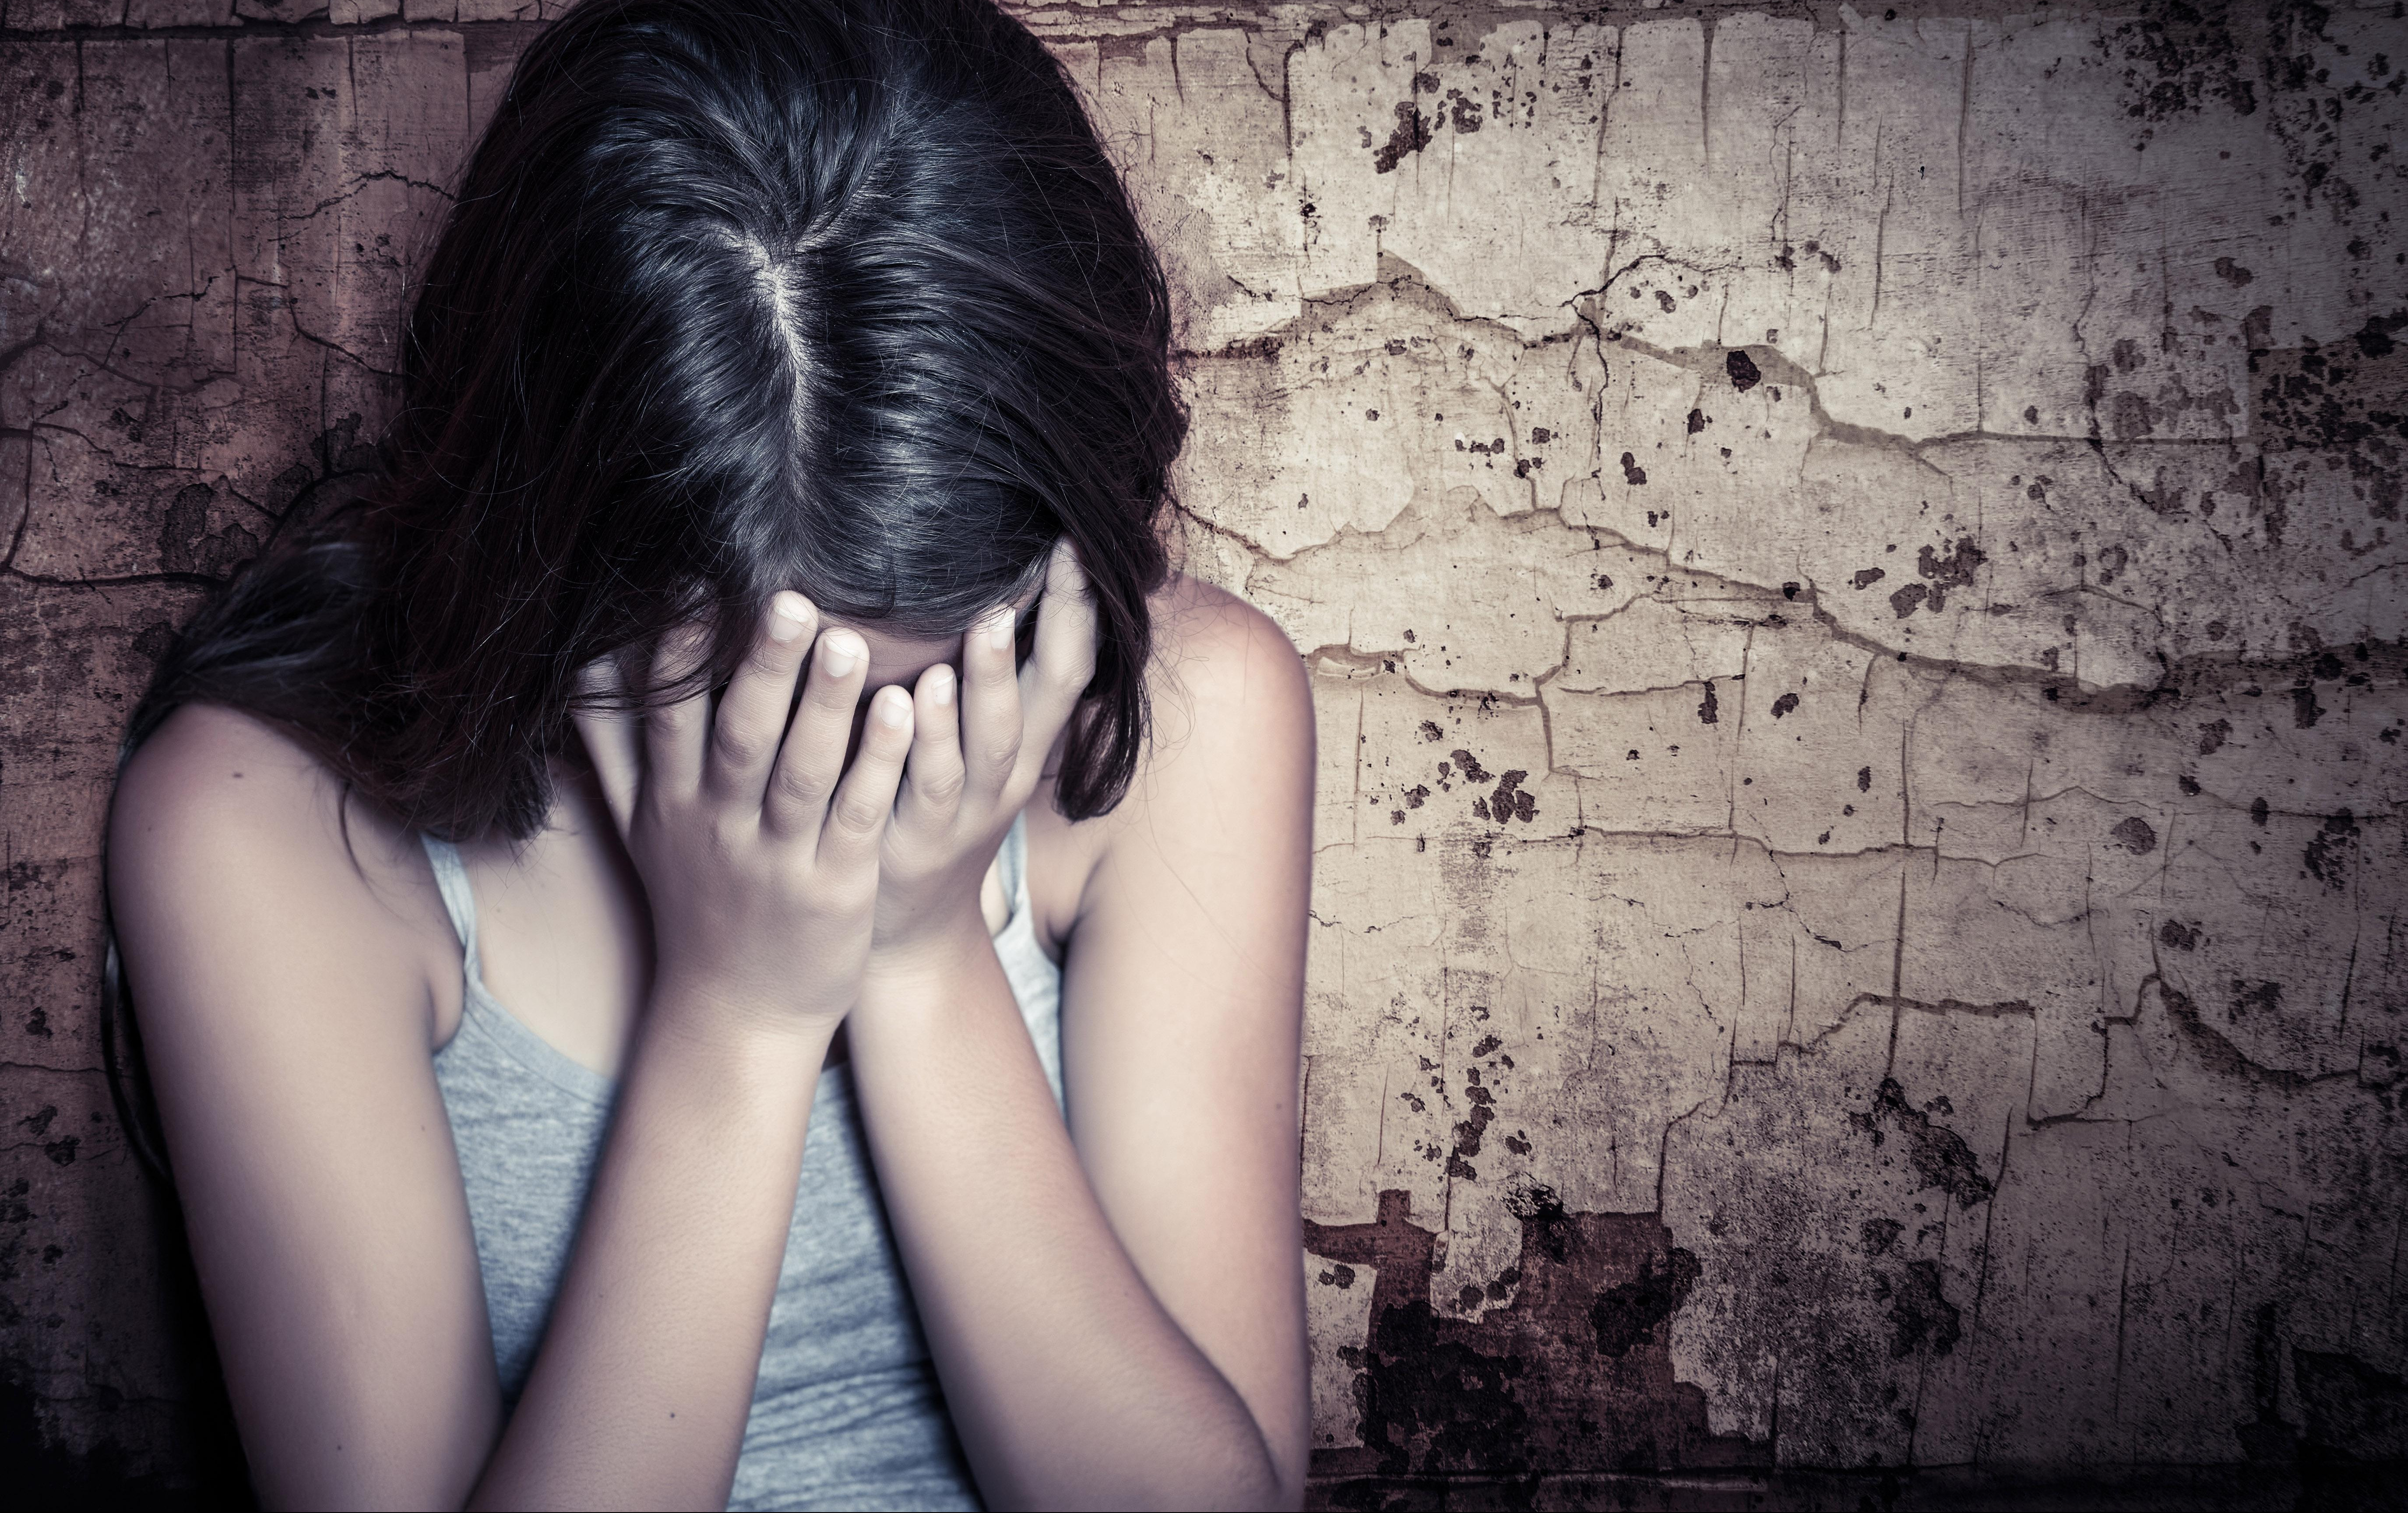 UŽAS KOD LESKOVCA! Tri meseca silovao trinaestogodišnju devojčicu